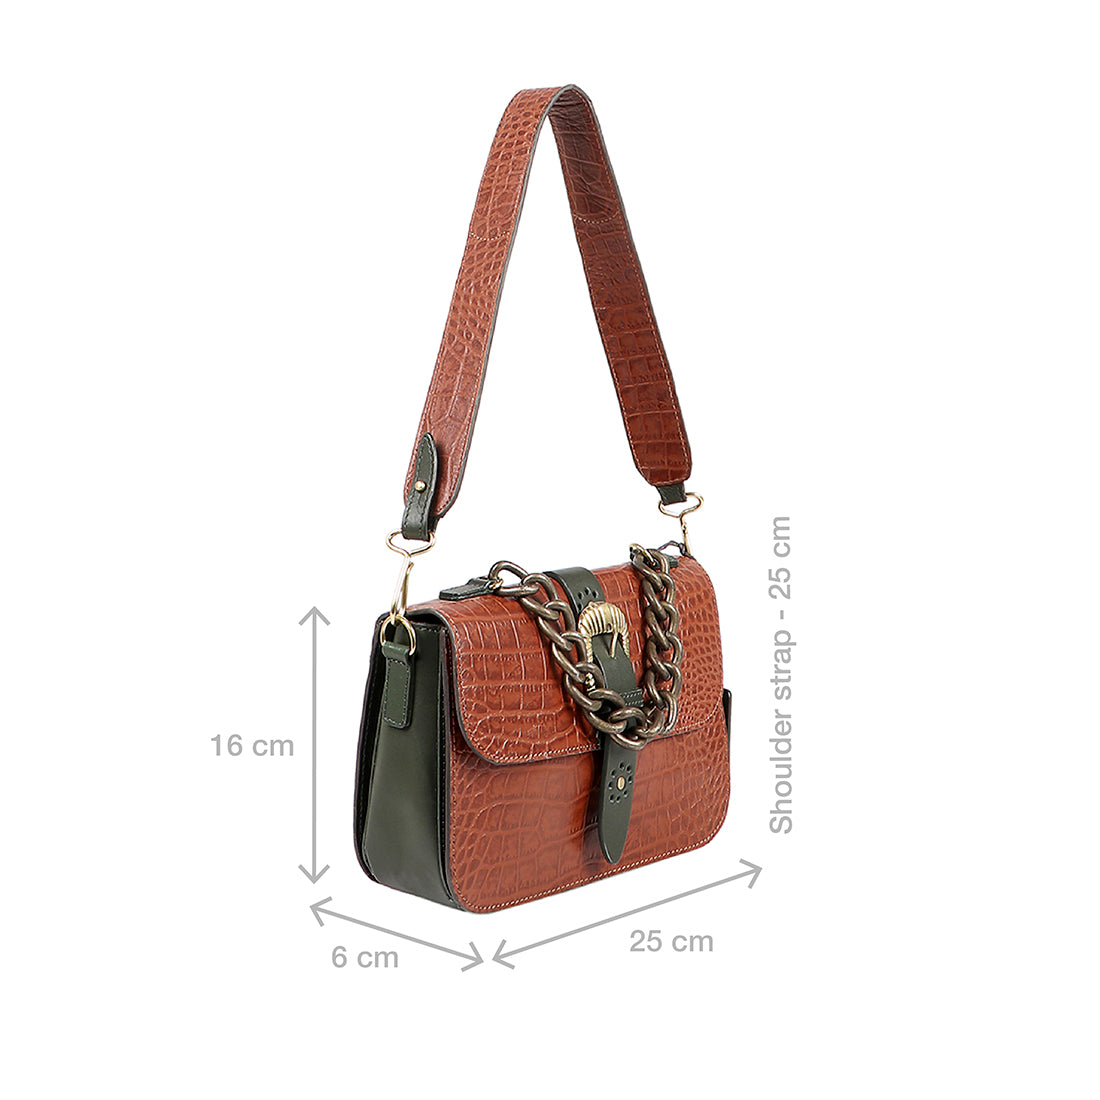 Buy Marsala Wild Lily 01 Sling Bag Online - Hidesign